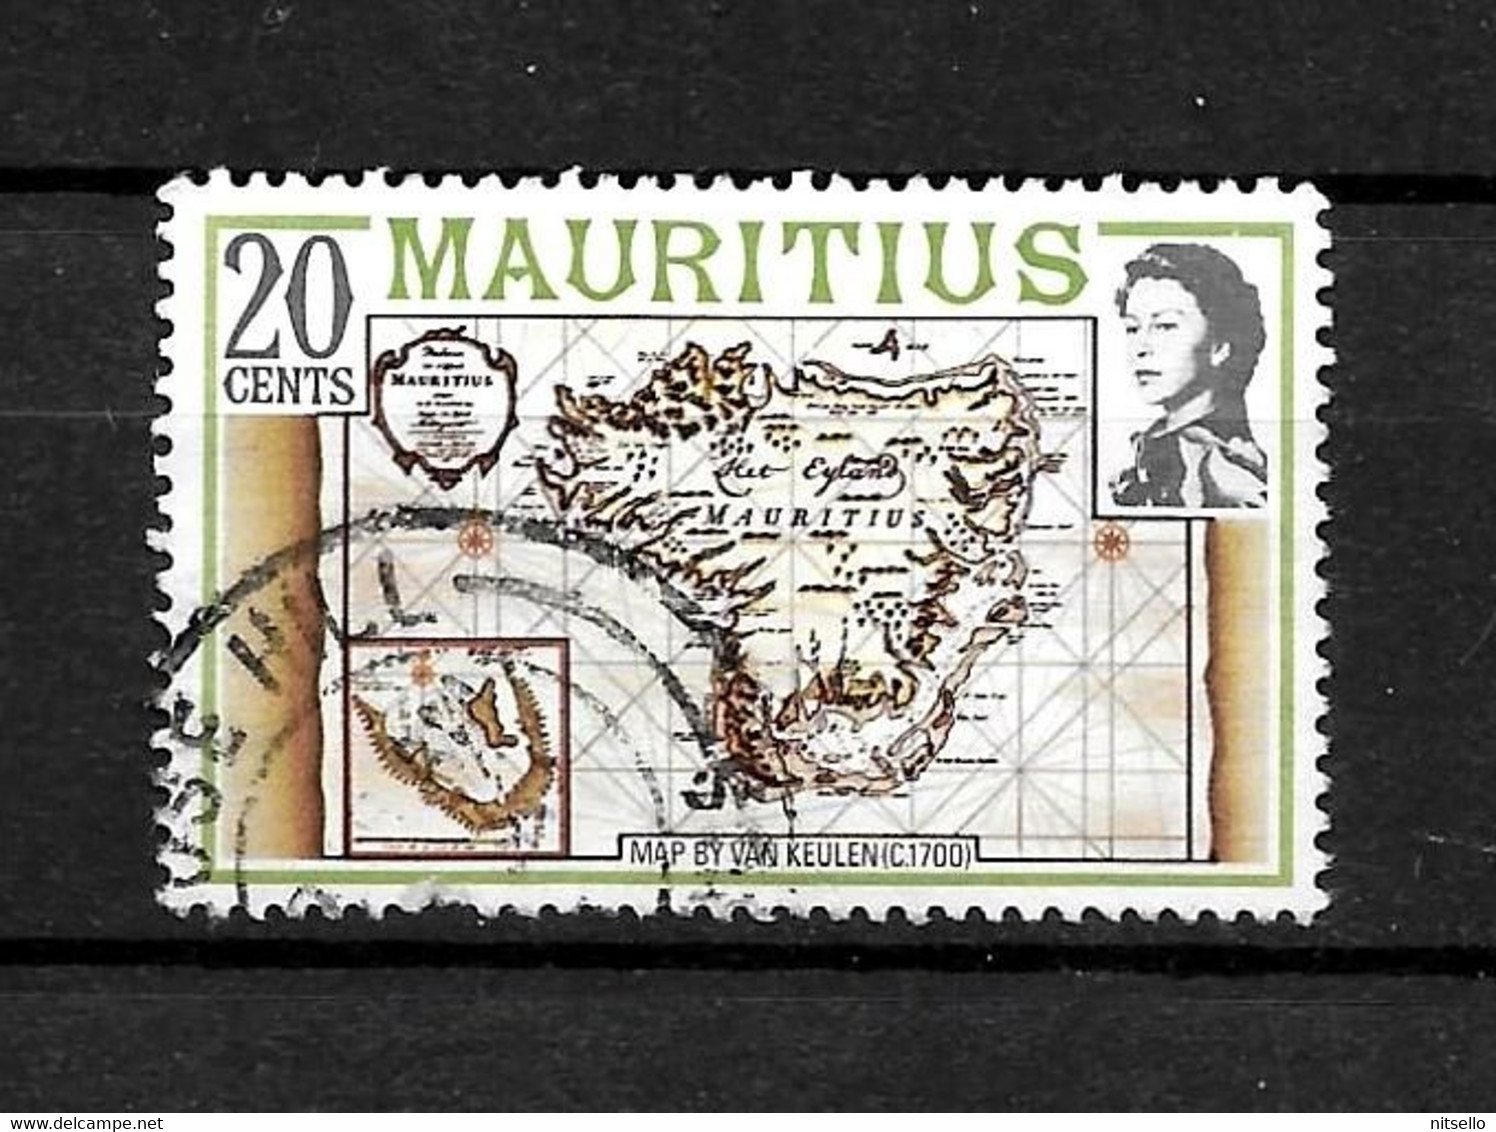 LOTE 2218   ///  COLONIAS INGLESAS -  MAURICIO  ¡¡¡ OFERTA - LIQUIDATION !!! JE LIQUIDE !!! - Mauritius (...-1967)